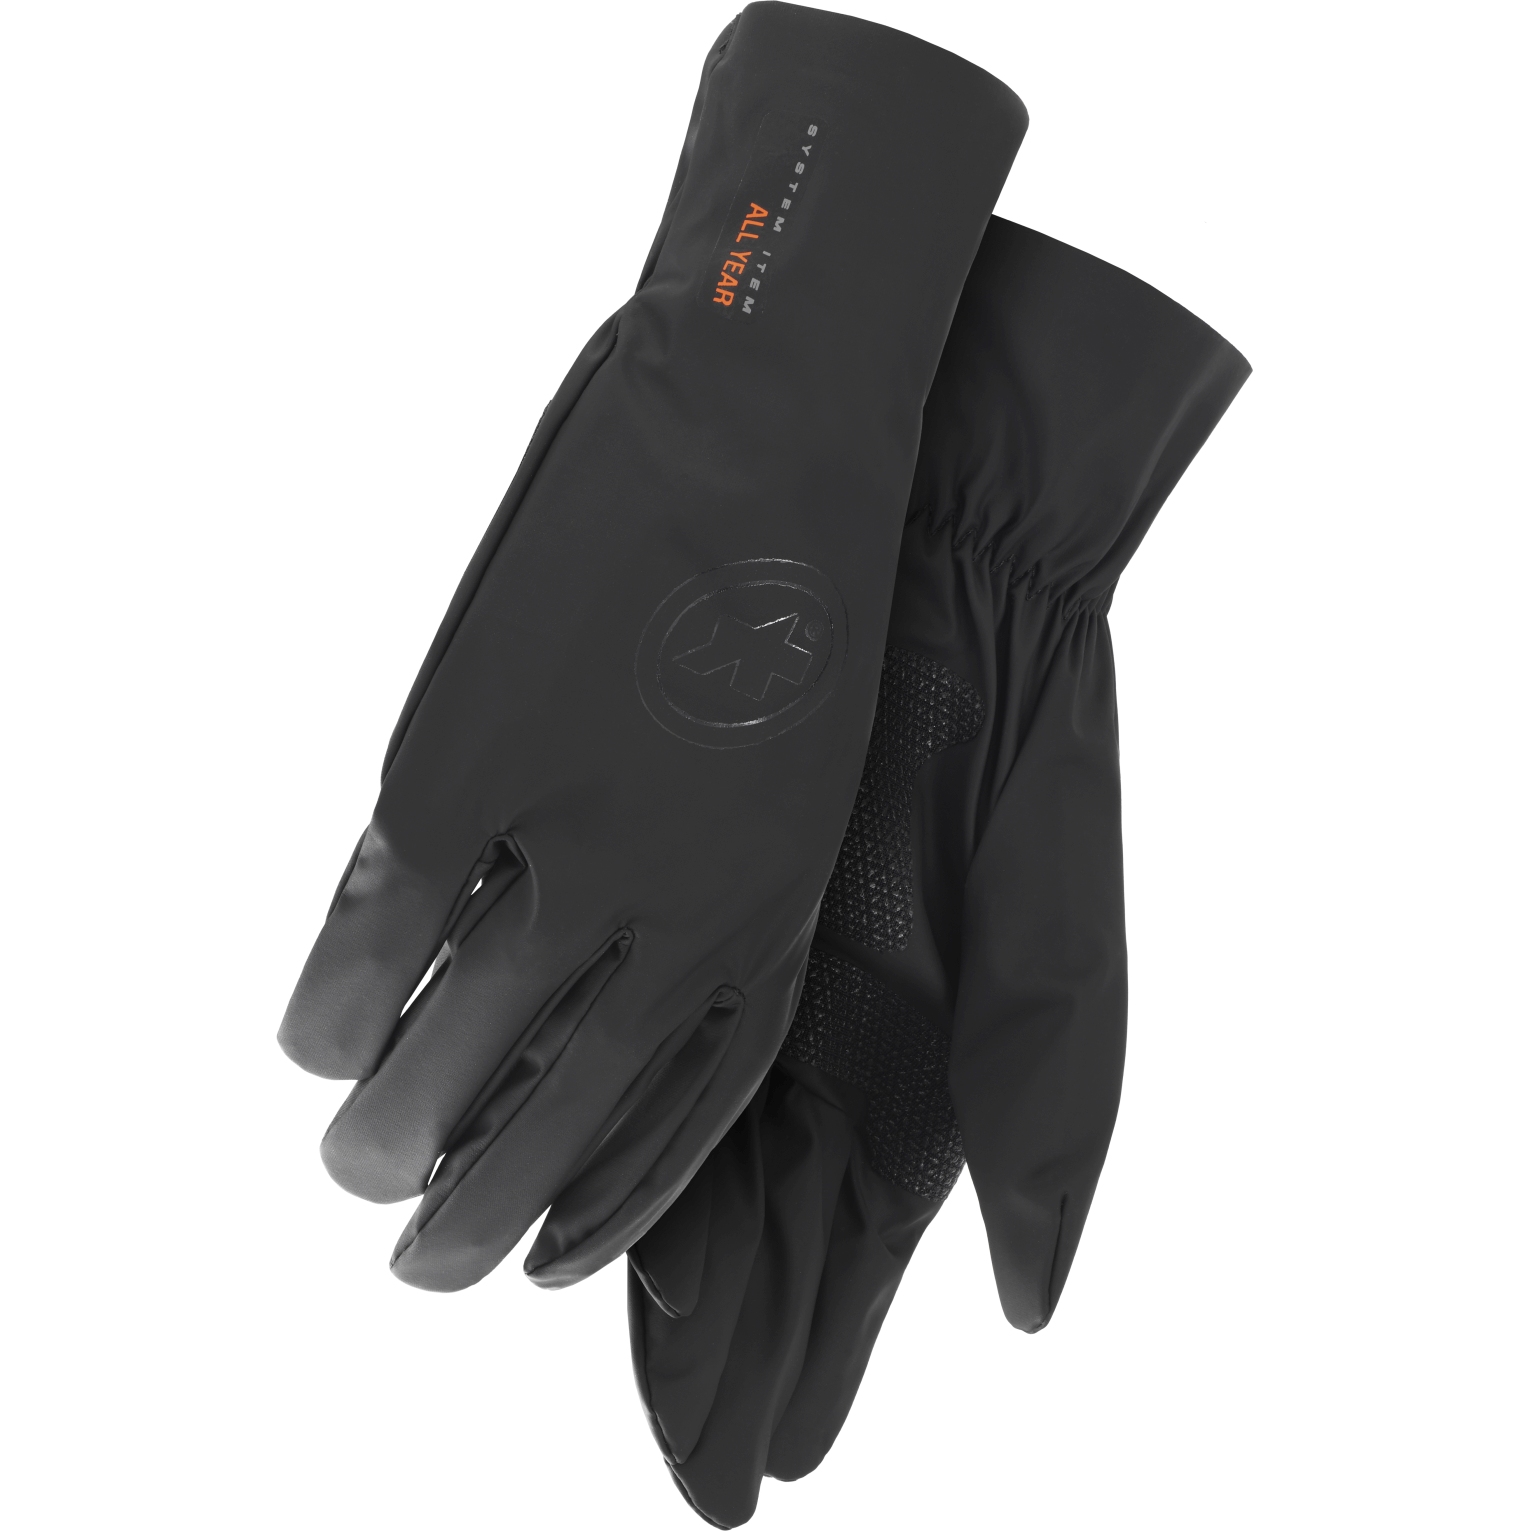 Productfoto van Assos RSR Thermo Rain Shell Gloves - blackSeries